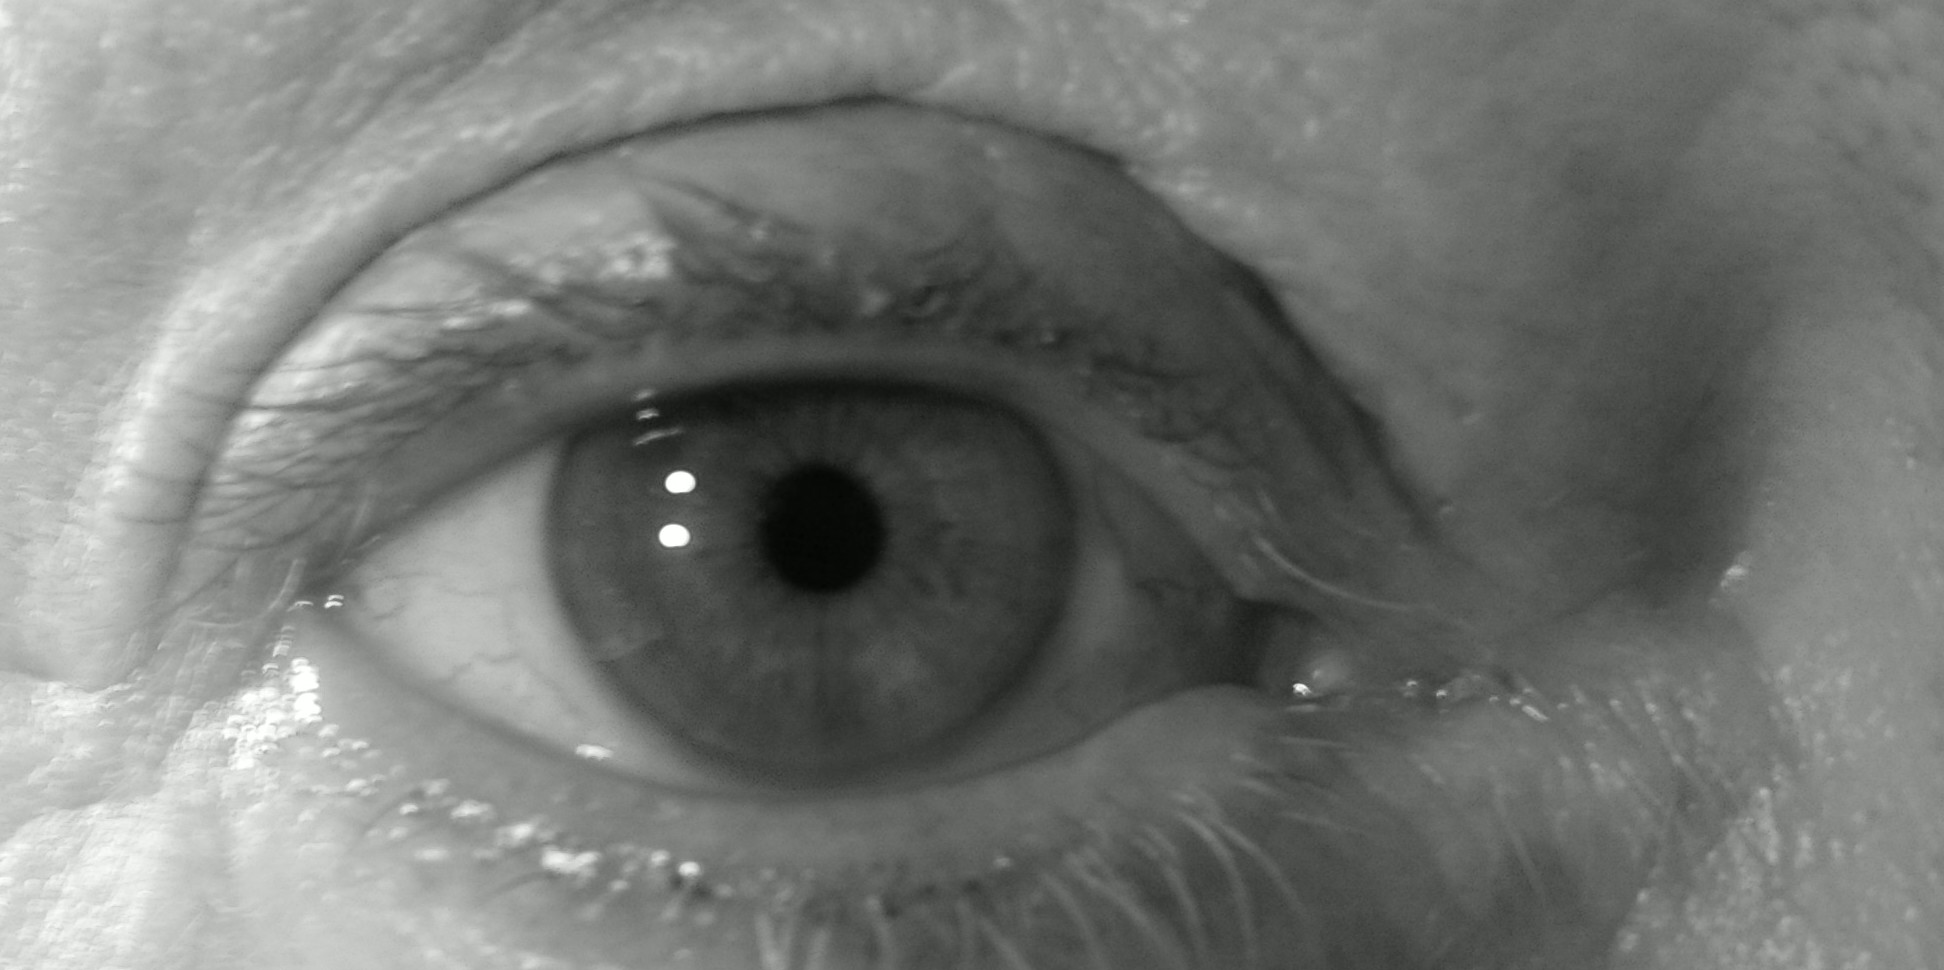 Laserbehandlung des Auges wegen Grauem Star